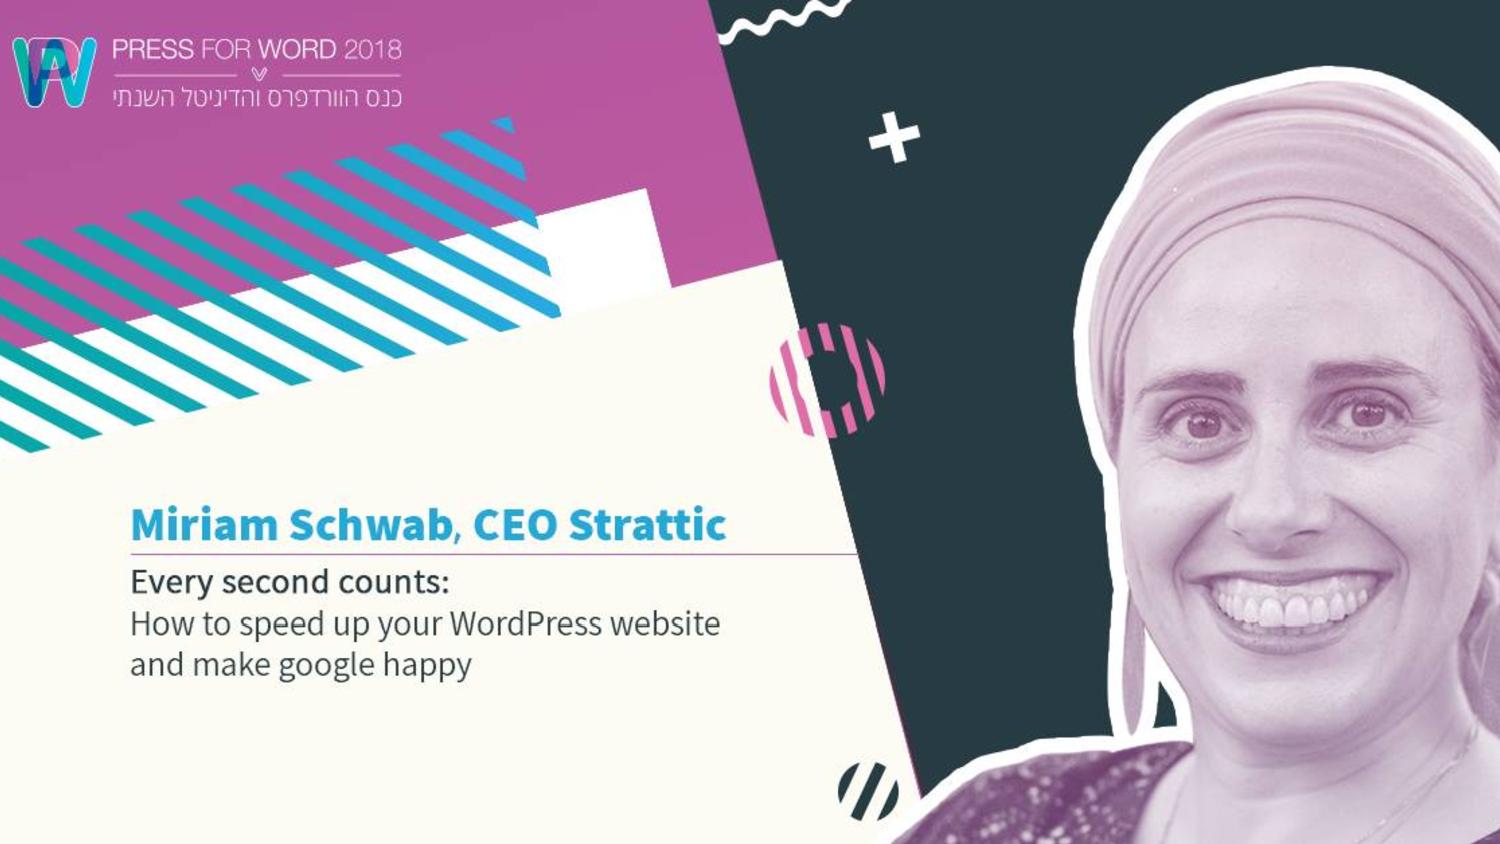 Miriam Schwab on 9 ways to speed up your WordPress website and make Google happy